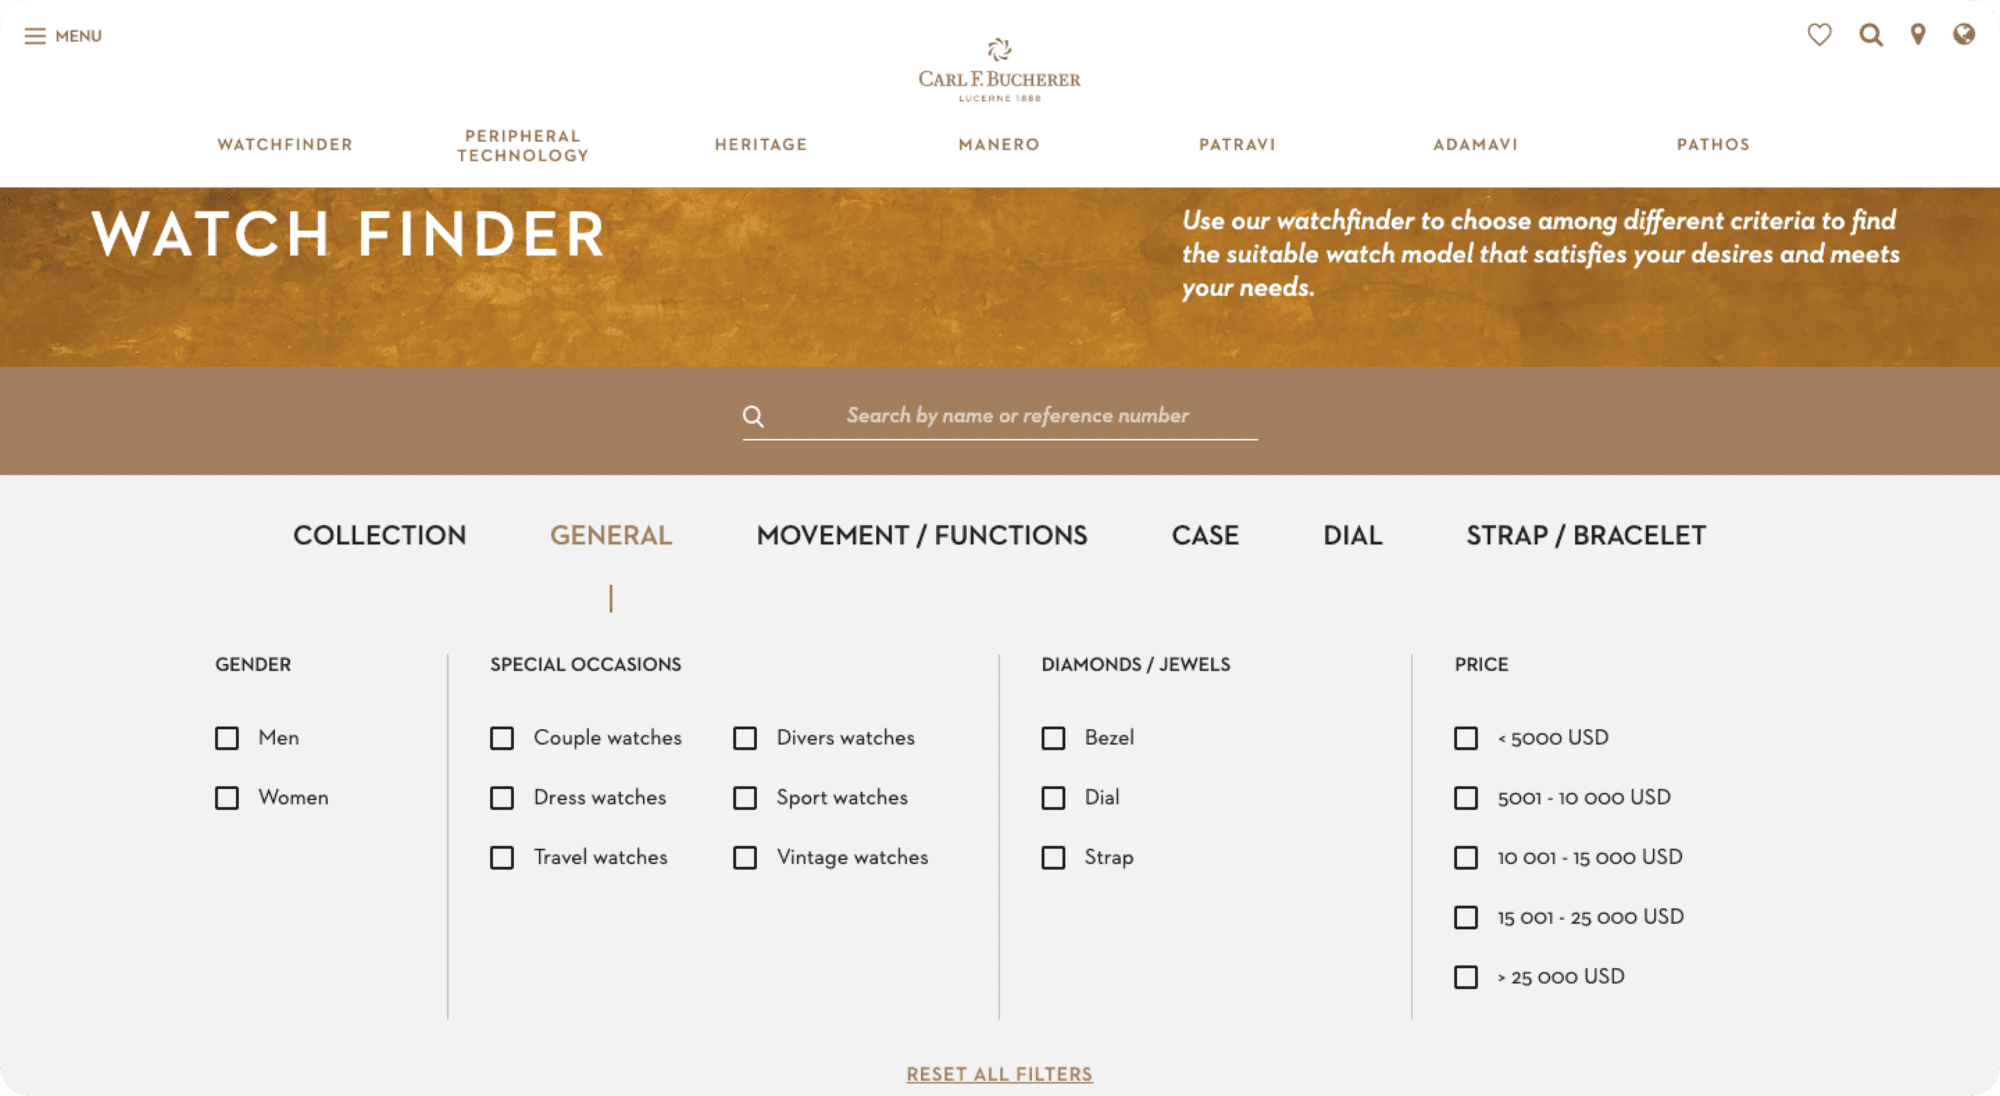 The WatchFinder page on Carl F. Bucherer eCommerce website